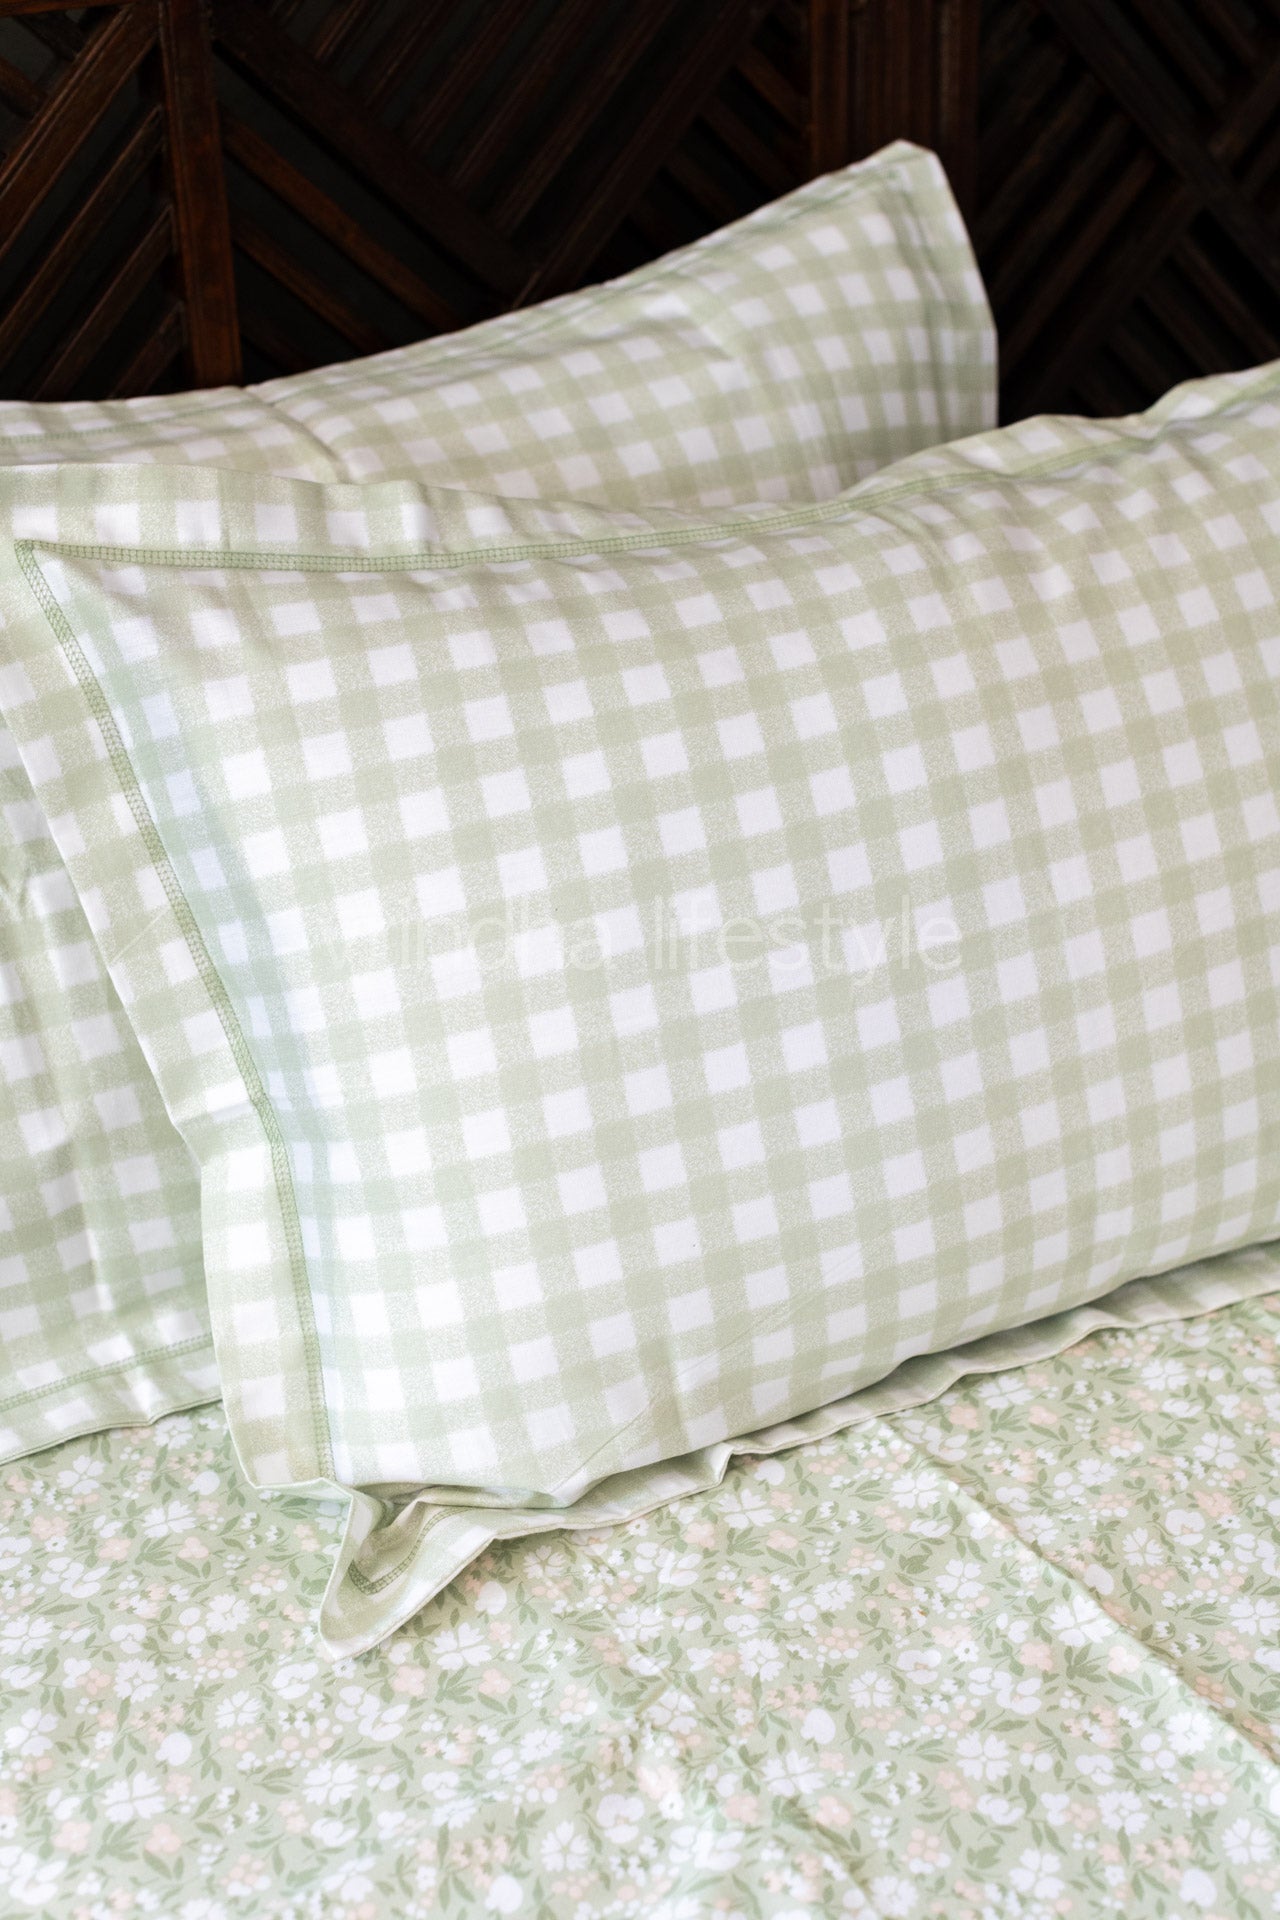 SOFT TWILL COTTON BED SHEET SET -Super king size